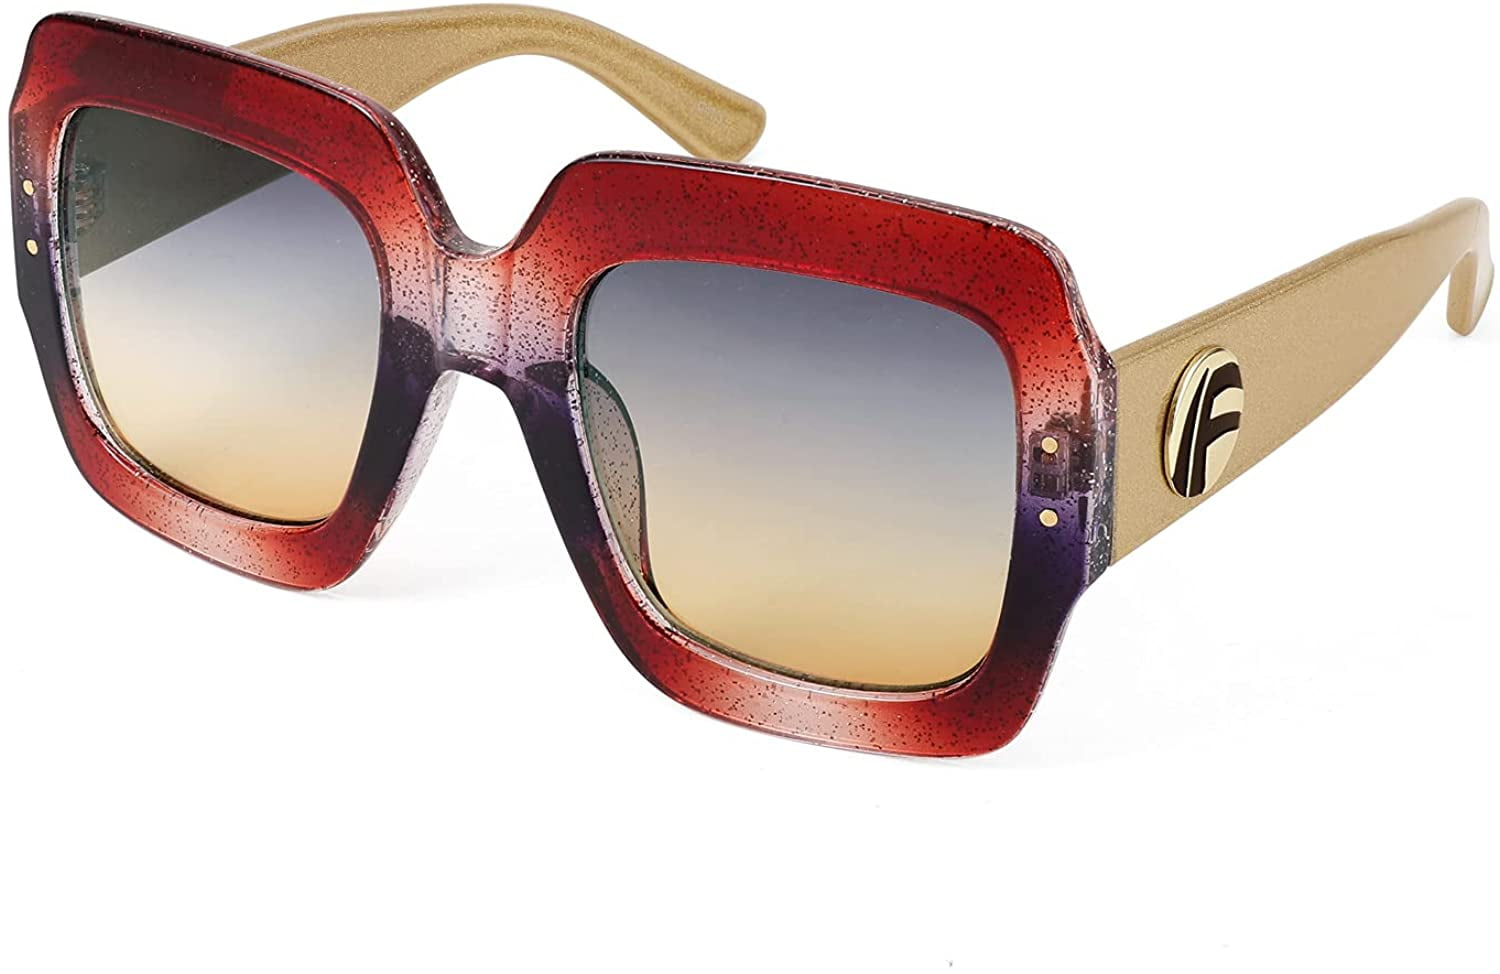 FEISEDY Oversized Square Sunglasses Multi Tinted Glitter Frame Stylish Inspired B2276 